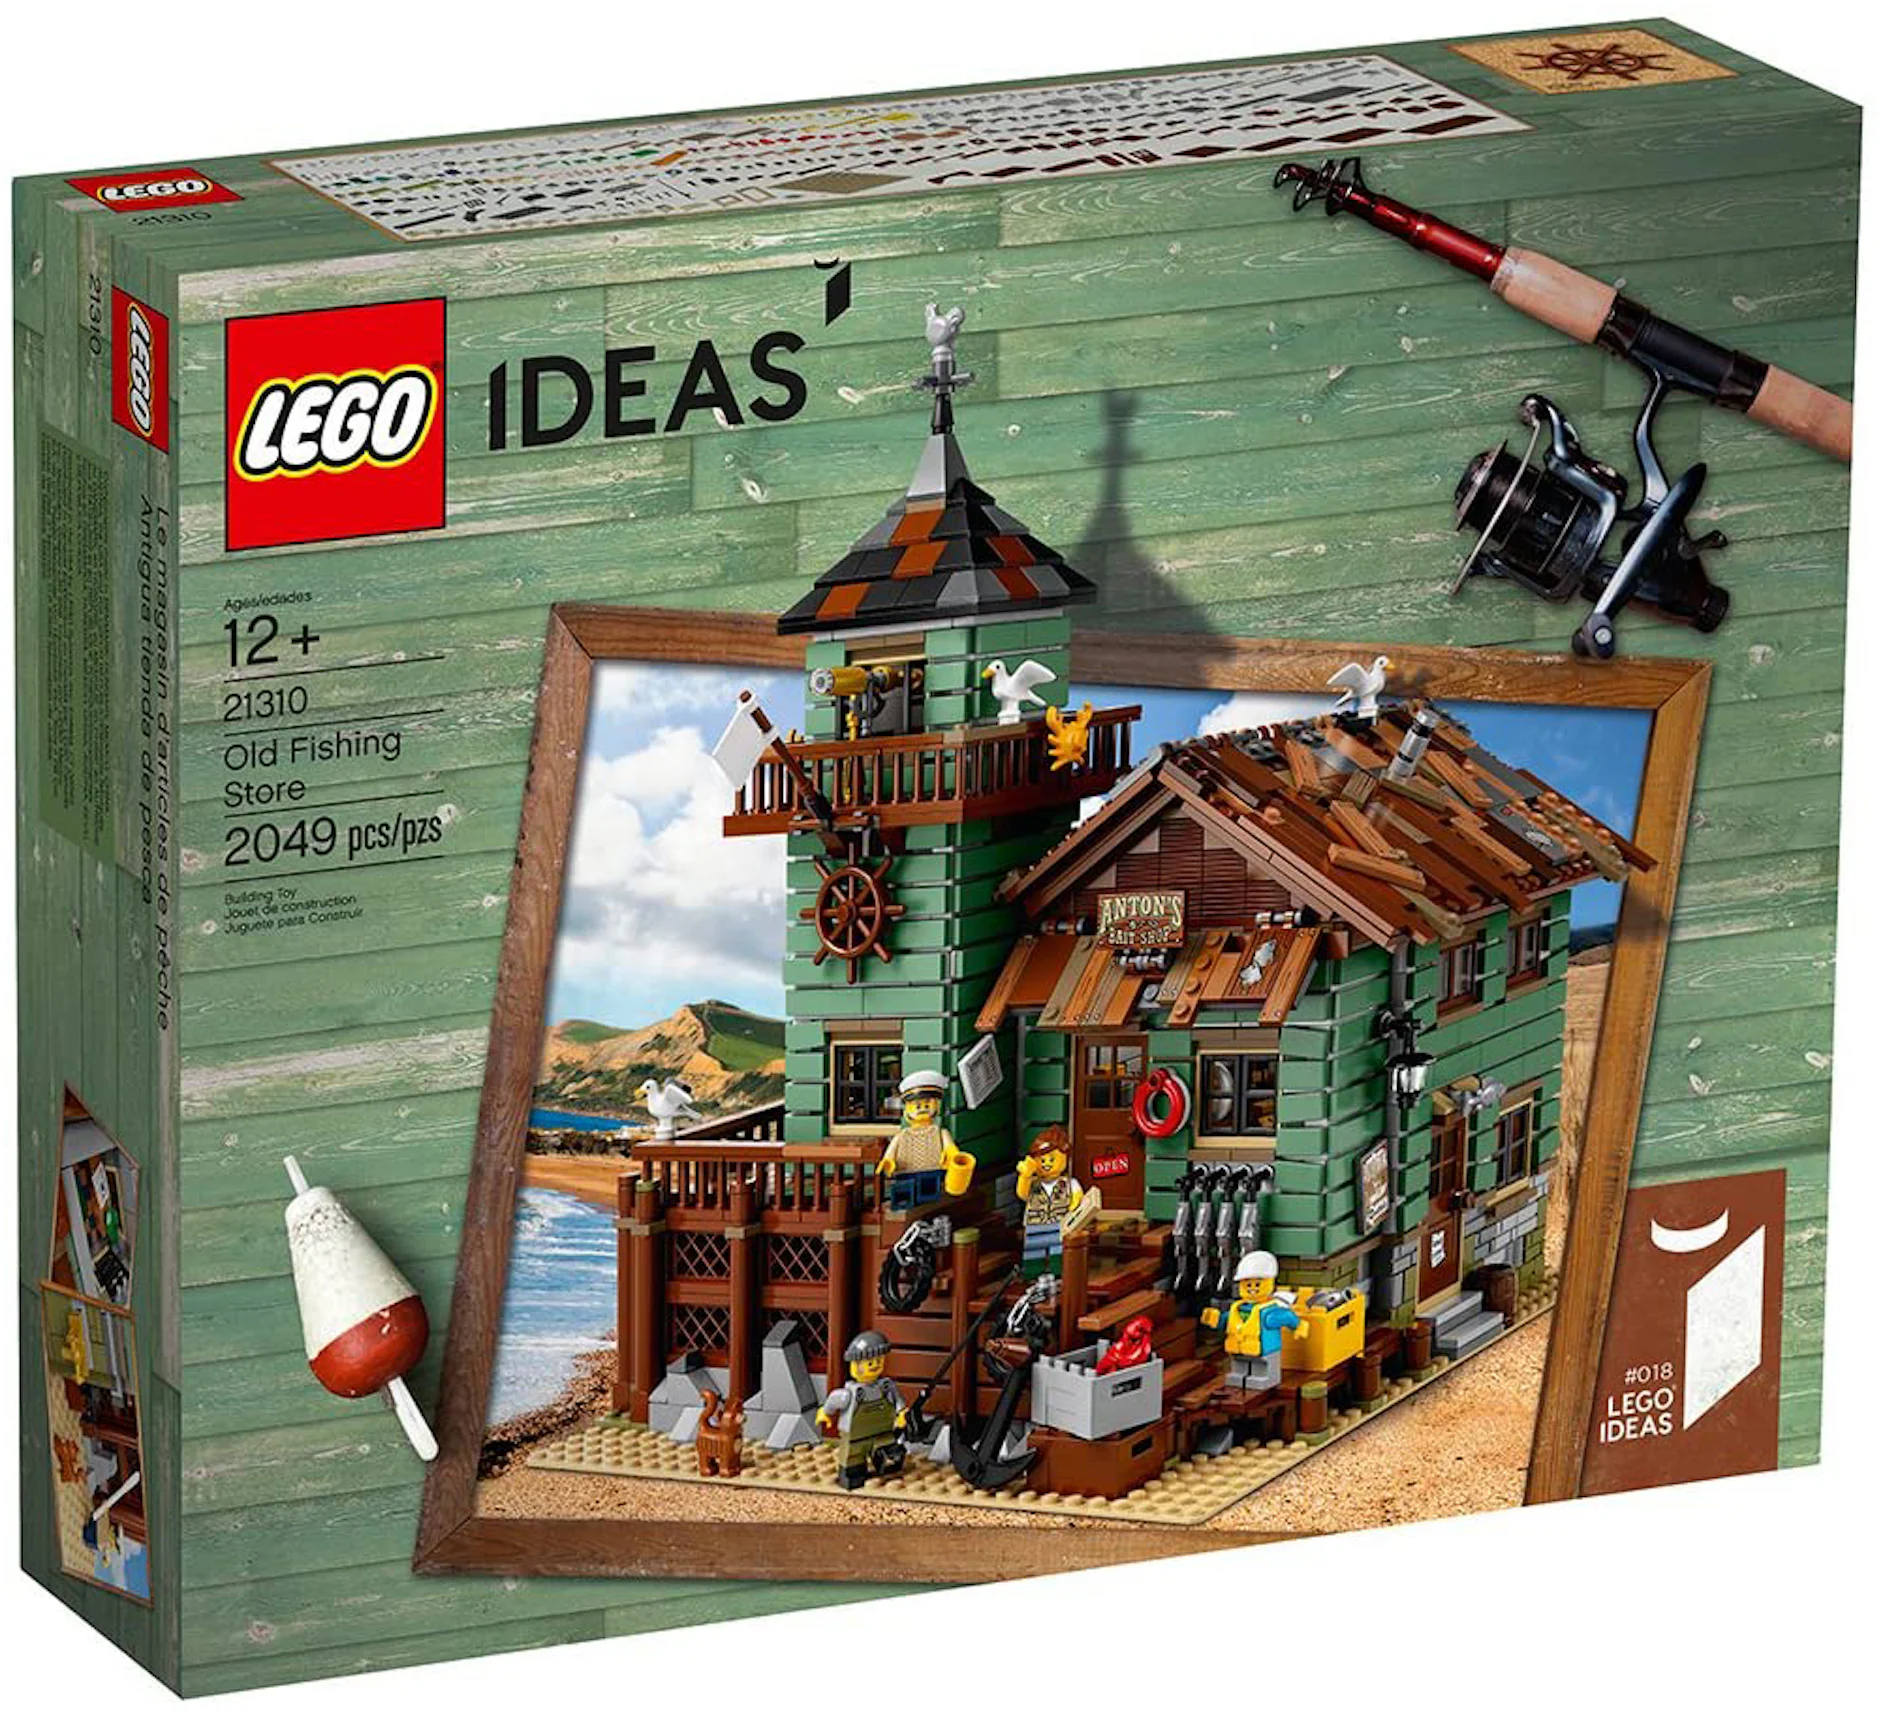 https://images.stockx.com/images/Lego-Old-Fishing-Store-Set-21310.jpg?fit=fill&bg=FFFFFF&w=1200&h=857&fm=webp&auto=compress&dpr=2&trim=color&updated_at=1611070393&q=60